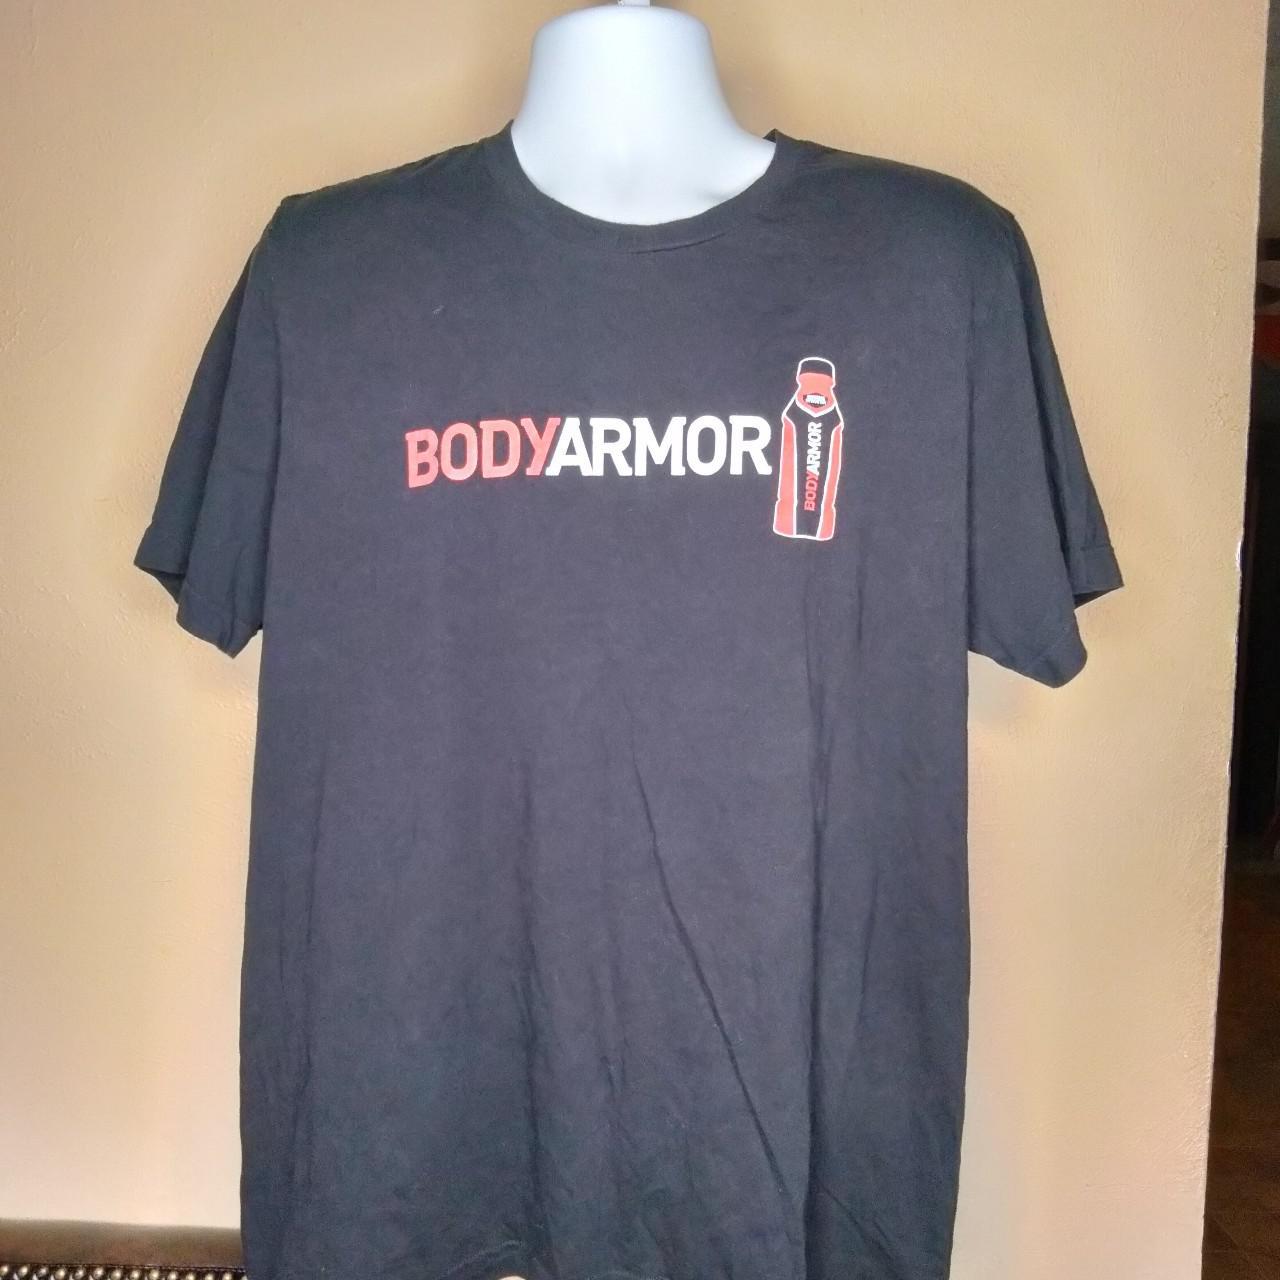 Supermarked Brutal prototype Body armor drink promo tshirt by coca cola hard find... - Depop